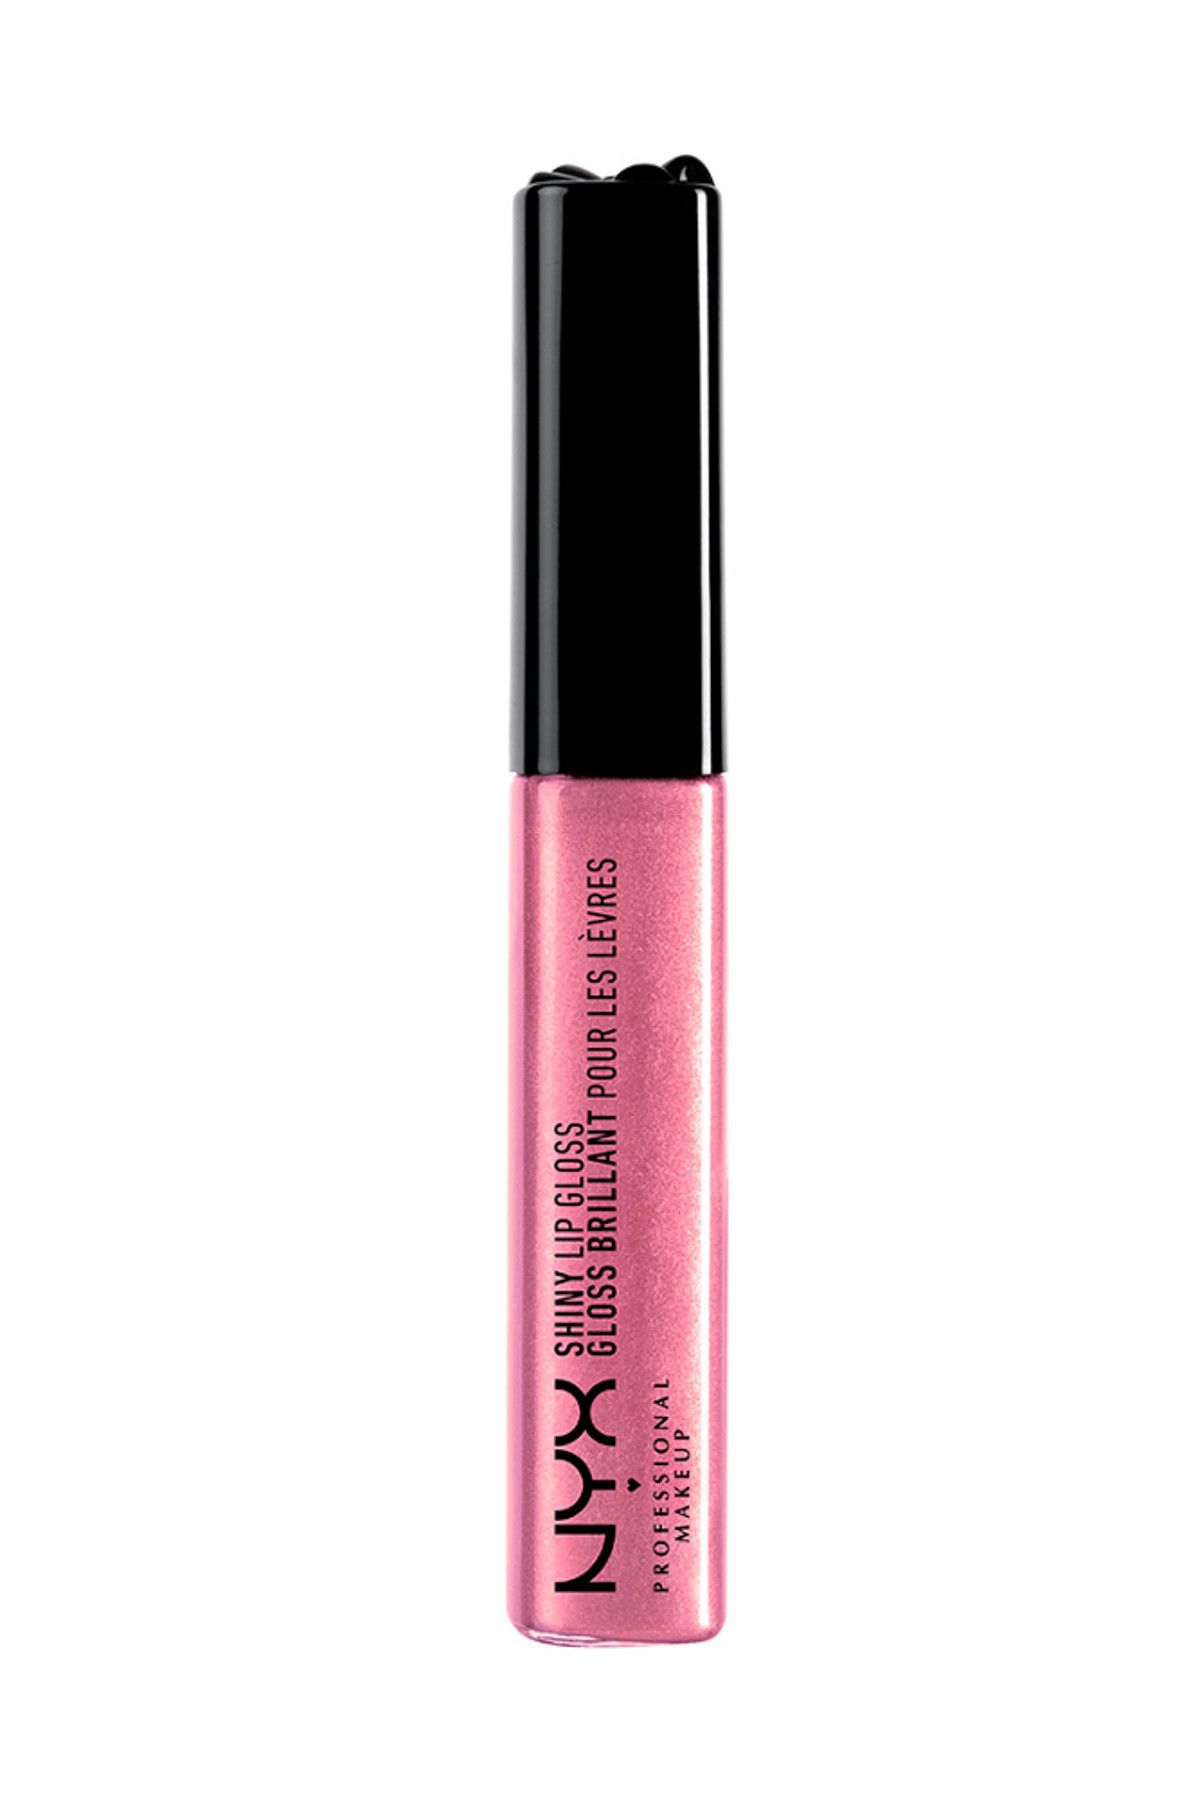 NYX Professional Makeup Dudak Parlatıcısı - Mega Shine Lip Gloss Gold Pink 21 g 800897118143